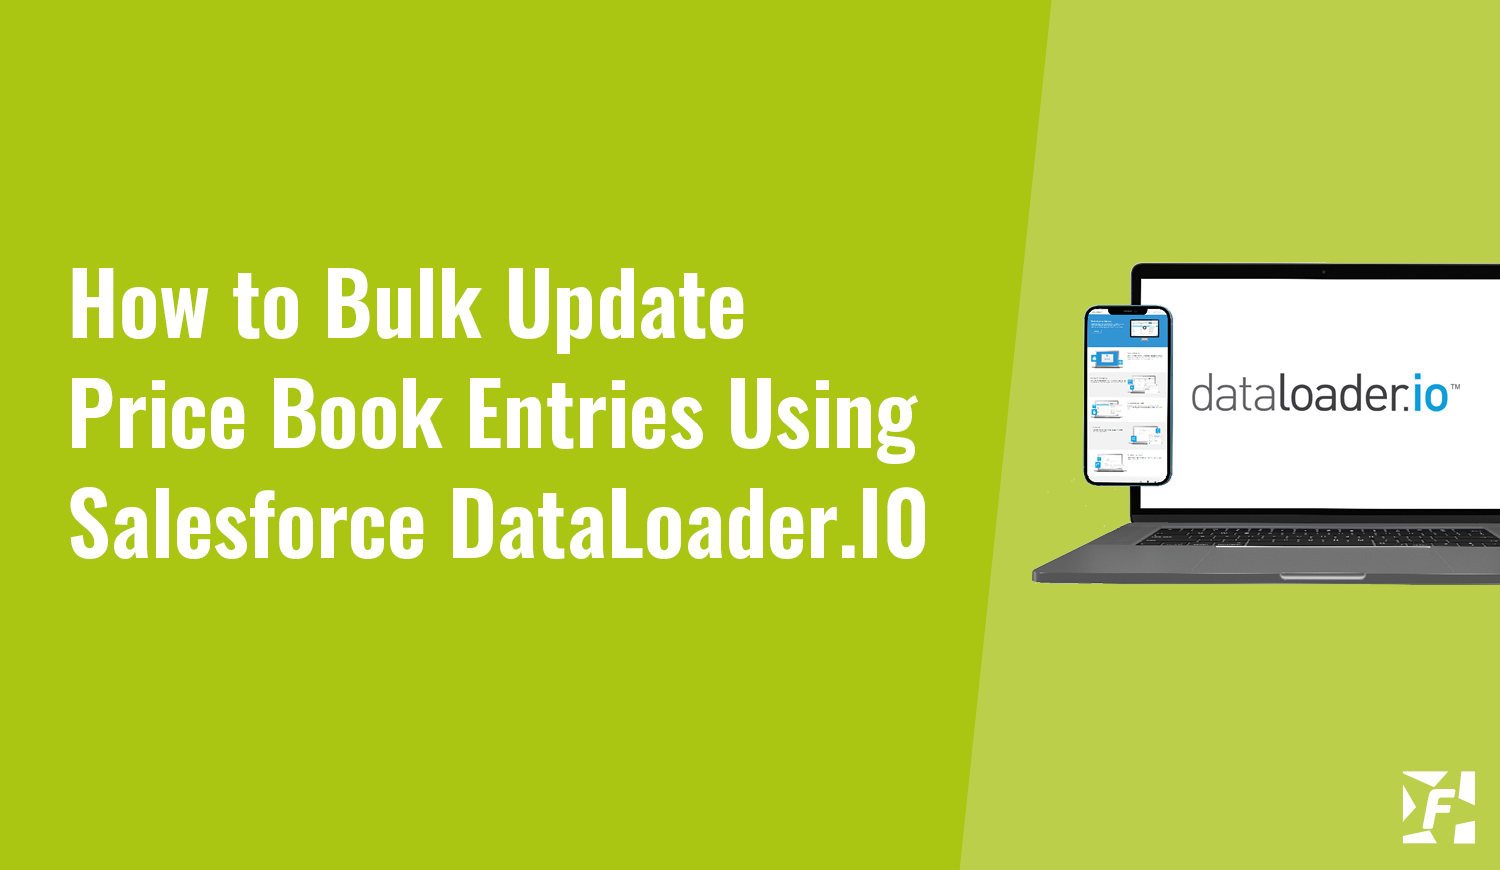 How To Bulk Update Price Book Entries Using Salesforce DataLoader.IO